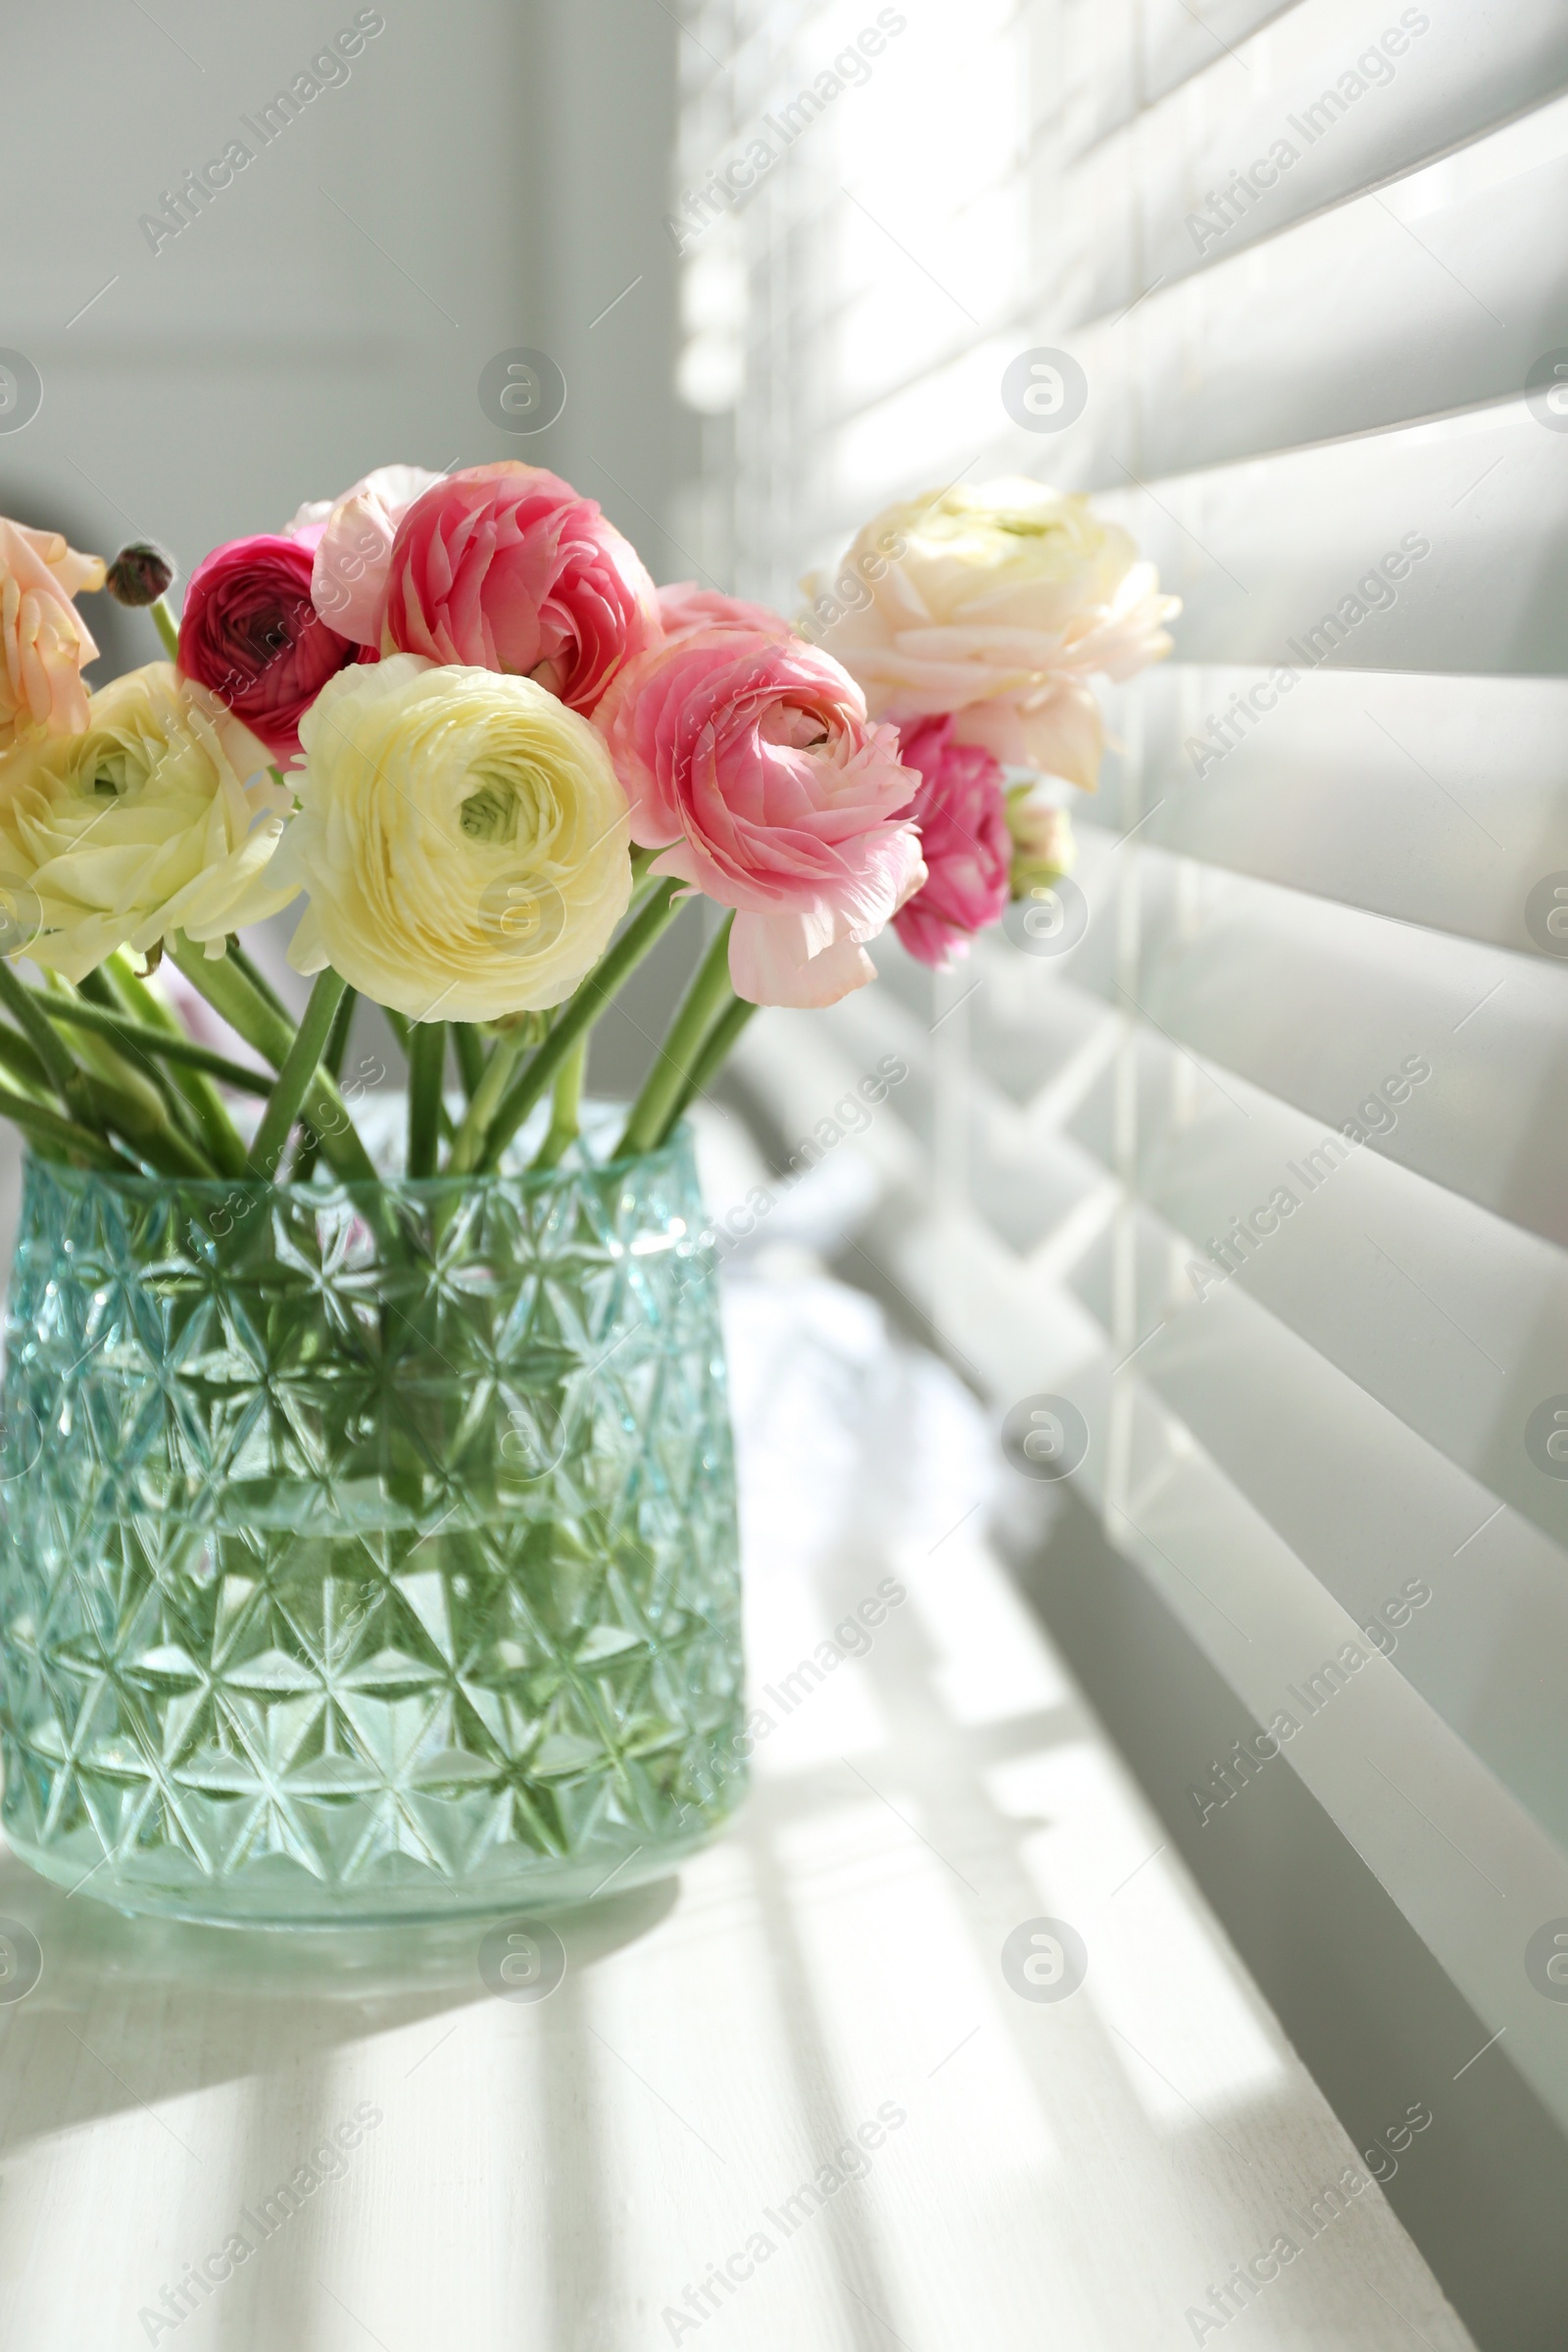 Photo of Beautiful ranunculus flowers in vase on window sill indoors